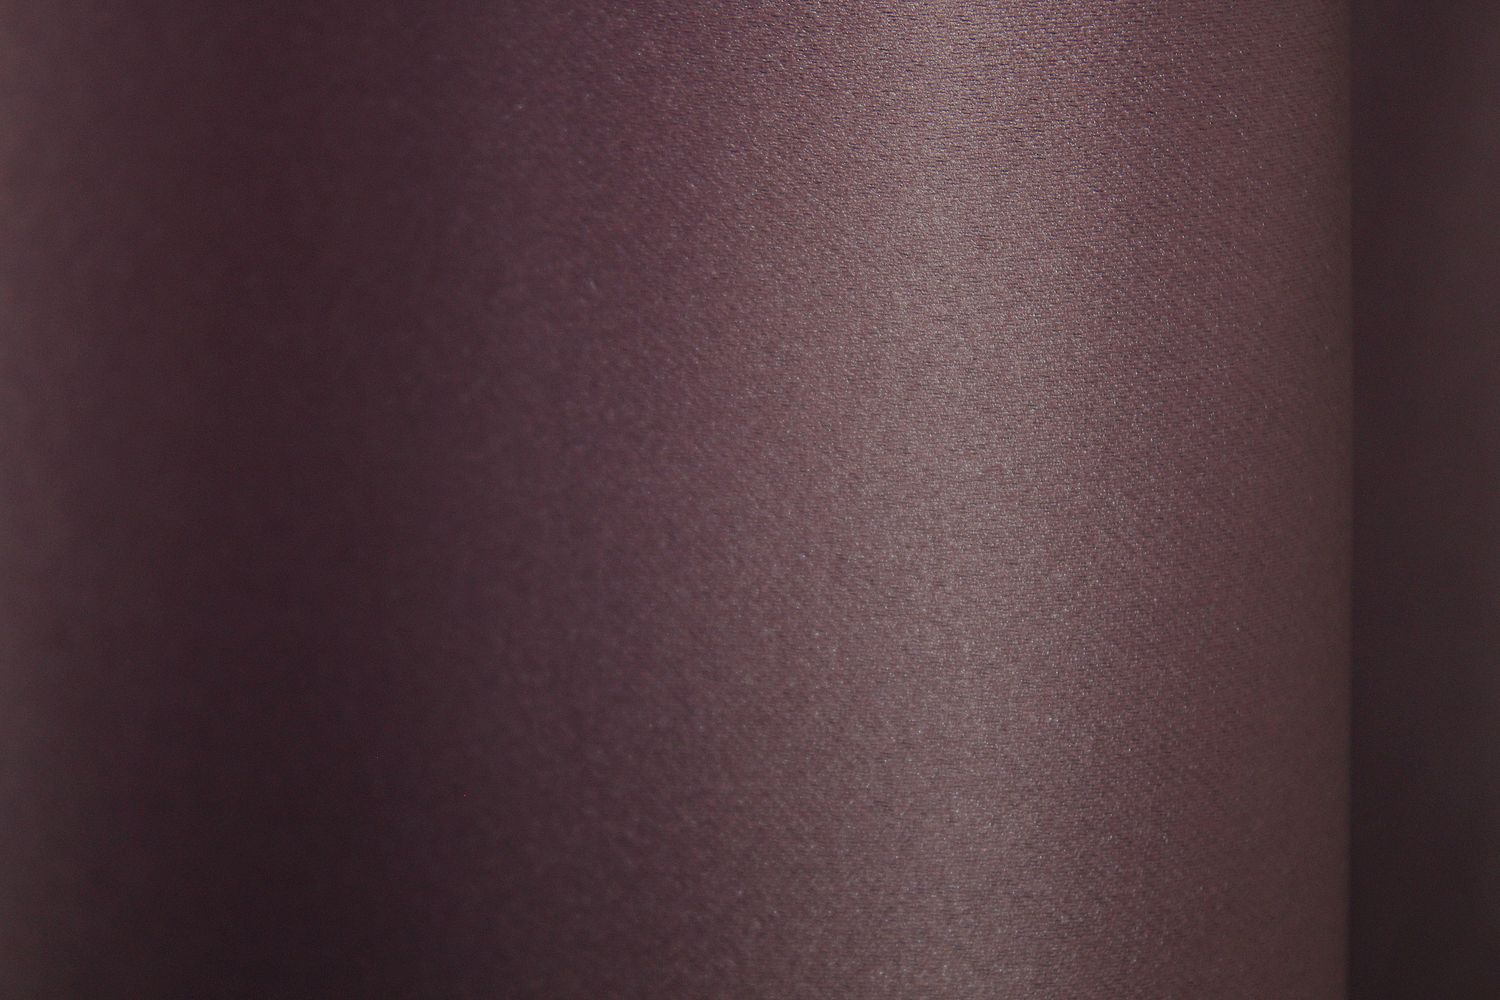 Комплект штор із тканини блекаут "Fusion Dimout" колір марсала 828ш, Марсала, Комплект штор (2шт. 1,5х2,7м.), 1,5 м., 2,7 м., 150, 270, 2 - 3 м., В комплекті 2 шт., Тасьма